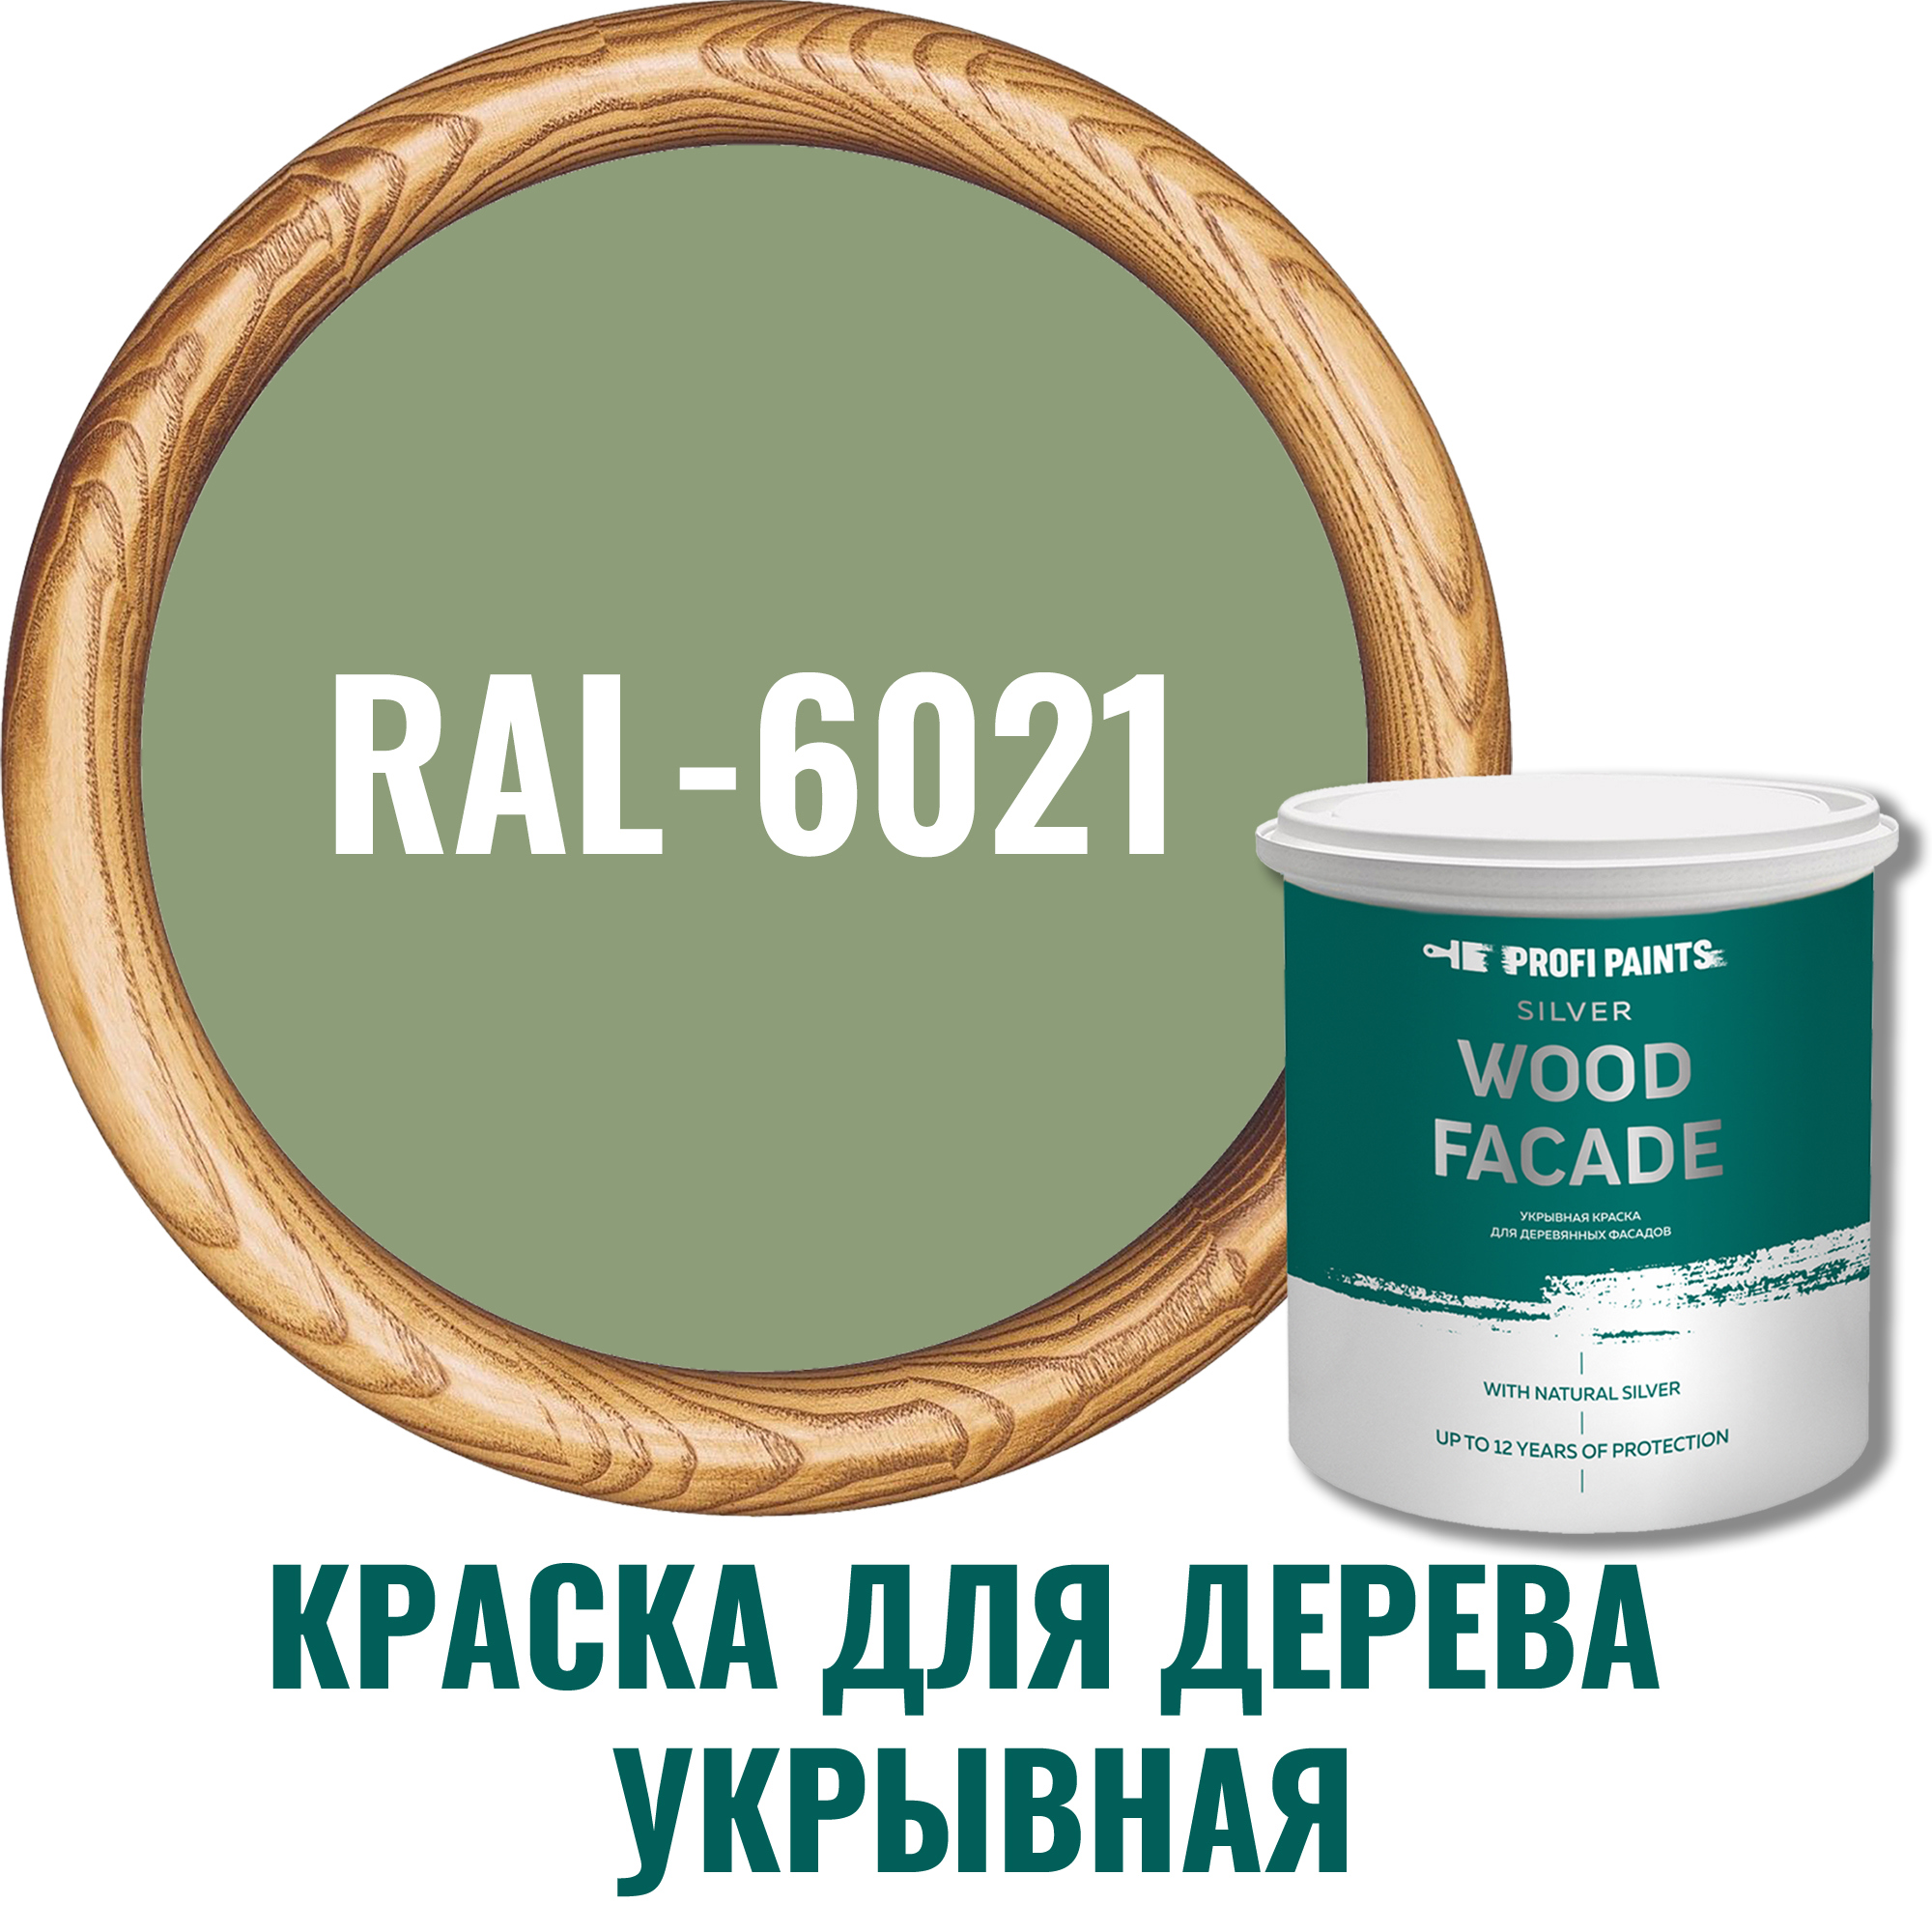 91106638 Краска для дерева 11279_D SILVER WOOD FASADE цвет RAL-6021 светло-зеленый 2.7 л STLM-0487631 PROFIPAINTS